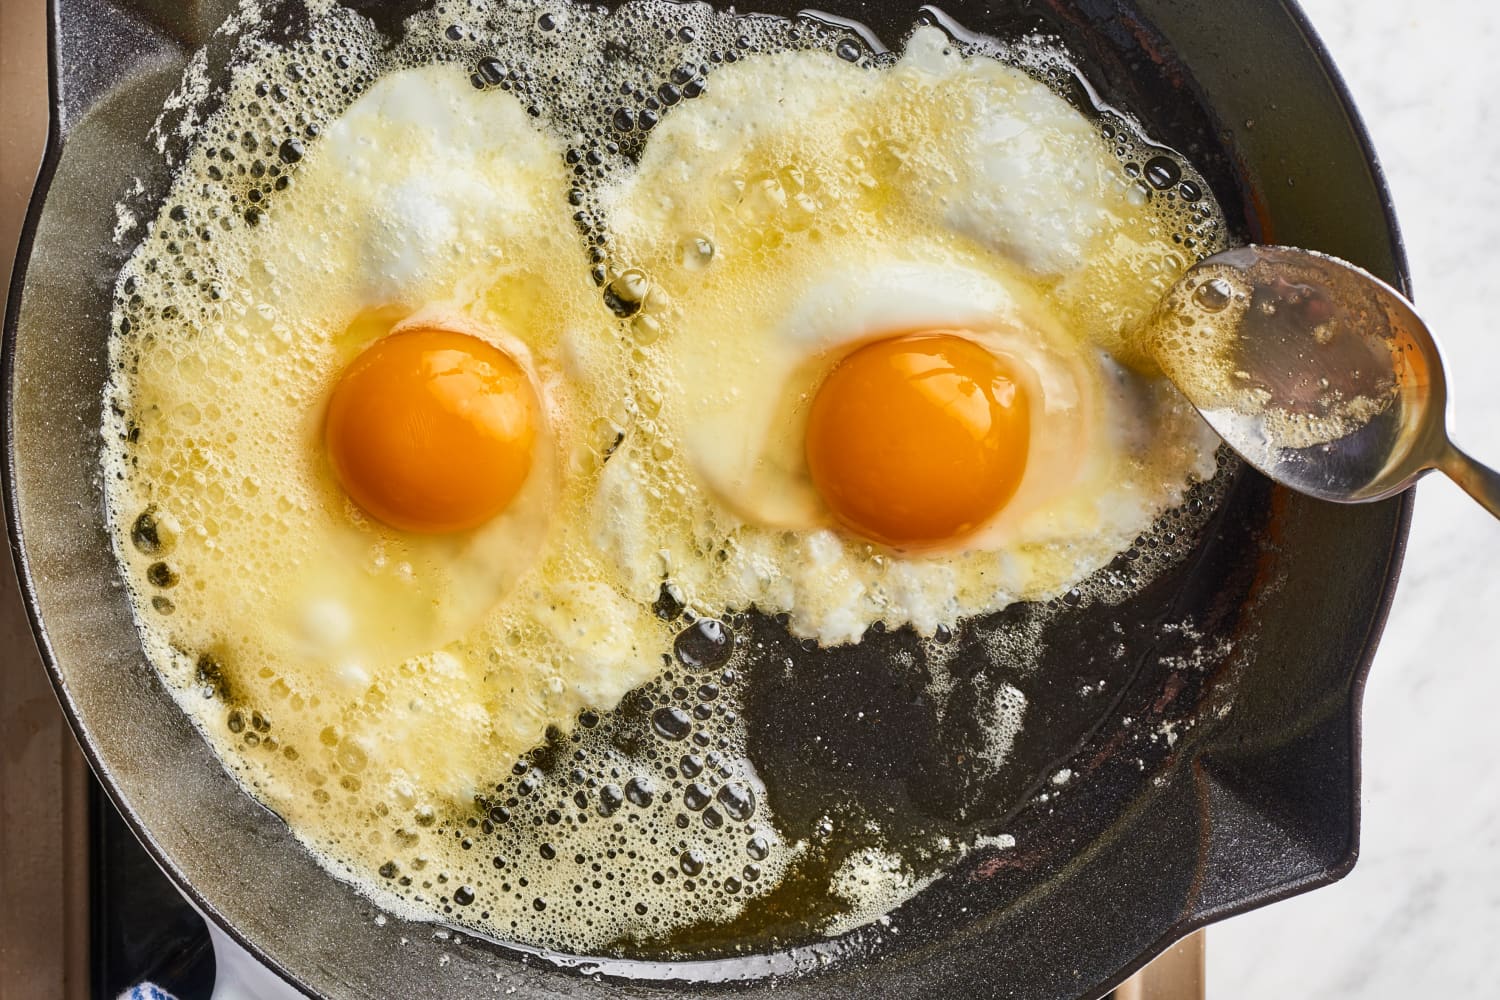 CIRCA Magazine  Cooking Eggs In Cast Iron